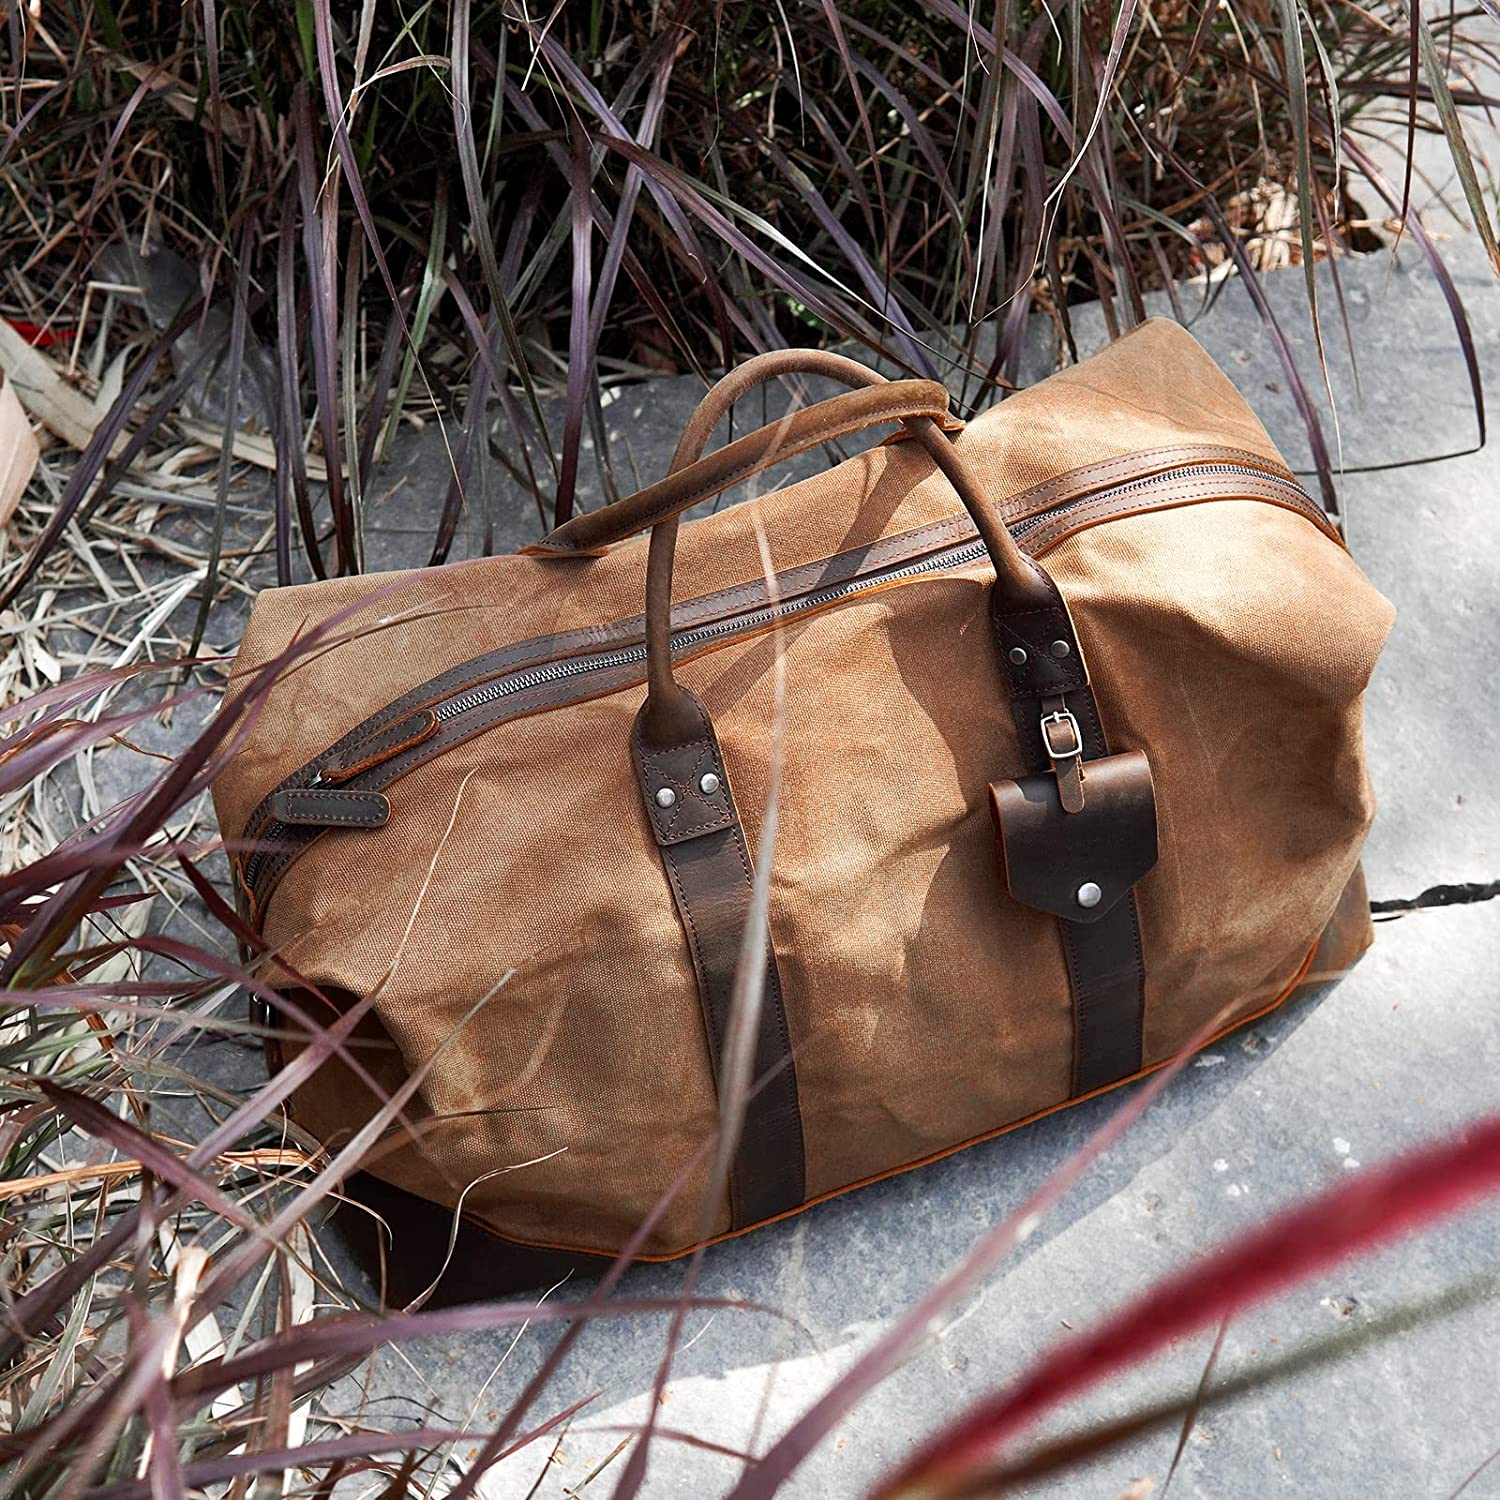 Canvas Travel Bags Vintage Duffle Bags Travel Handbags Shoulder